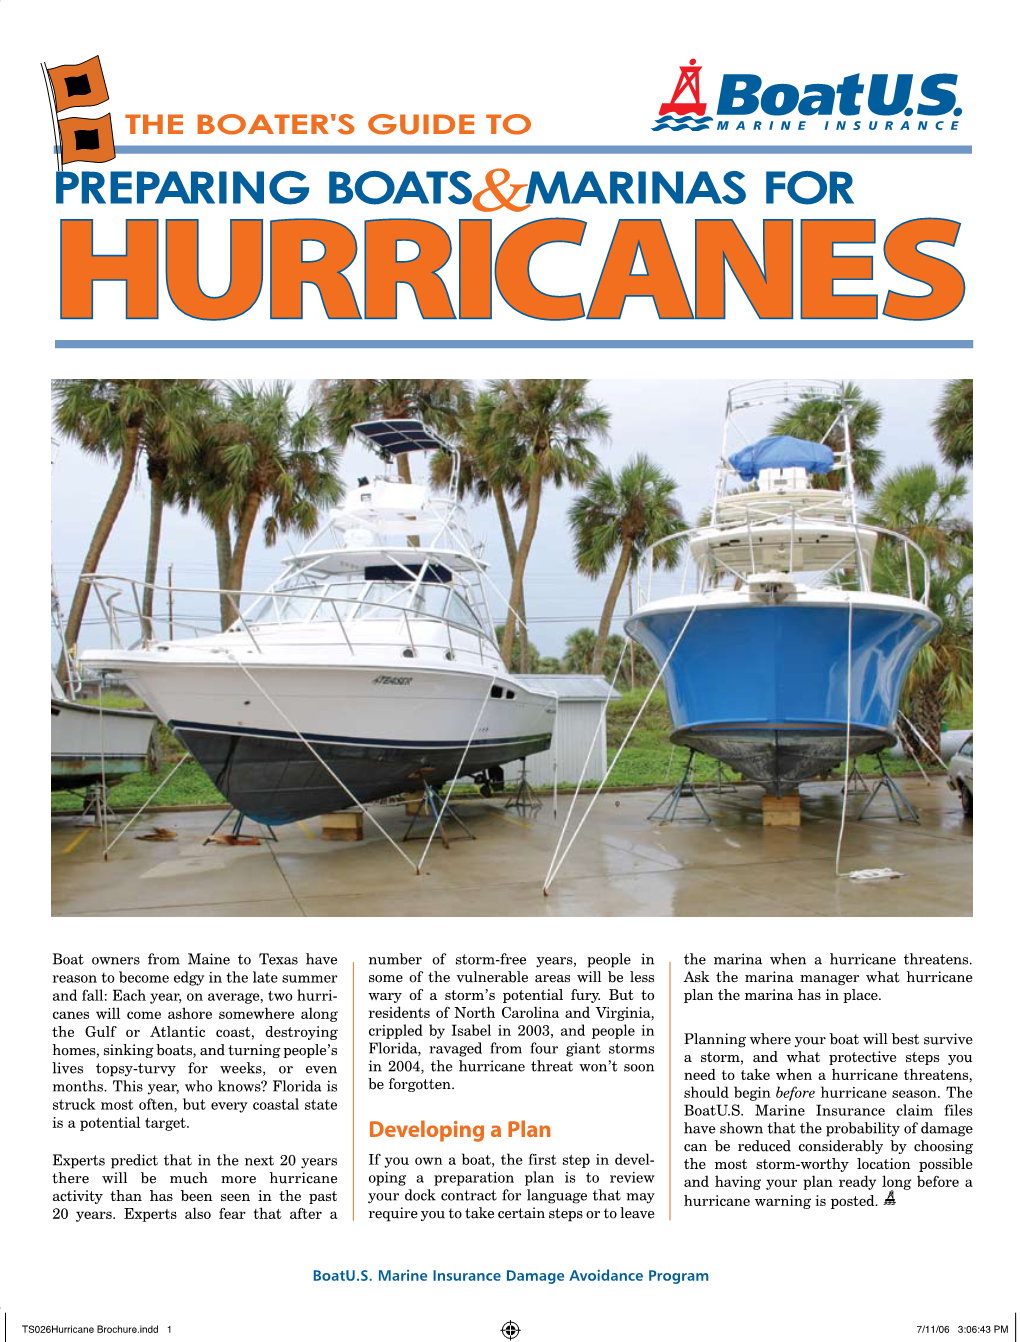 Preparing Boats, Marinas for Hurricanes